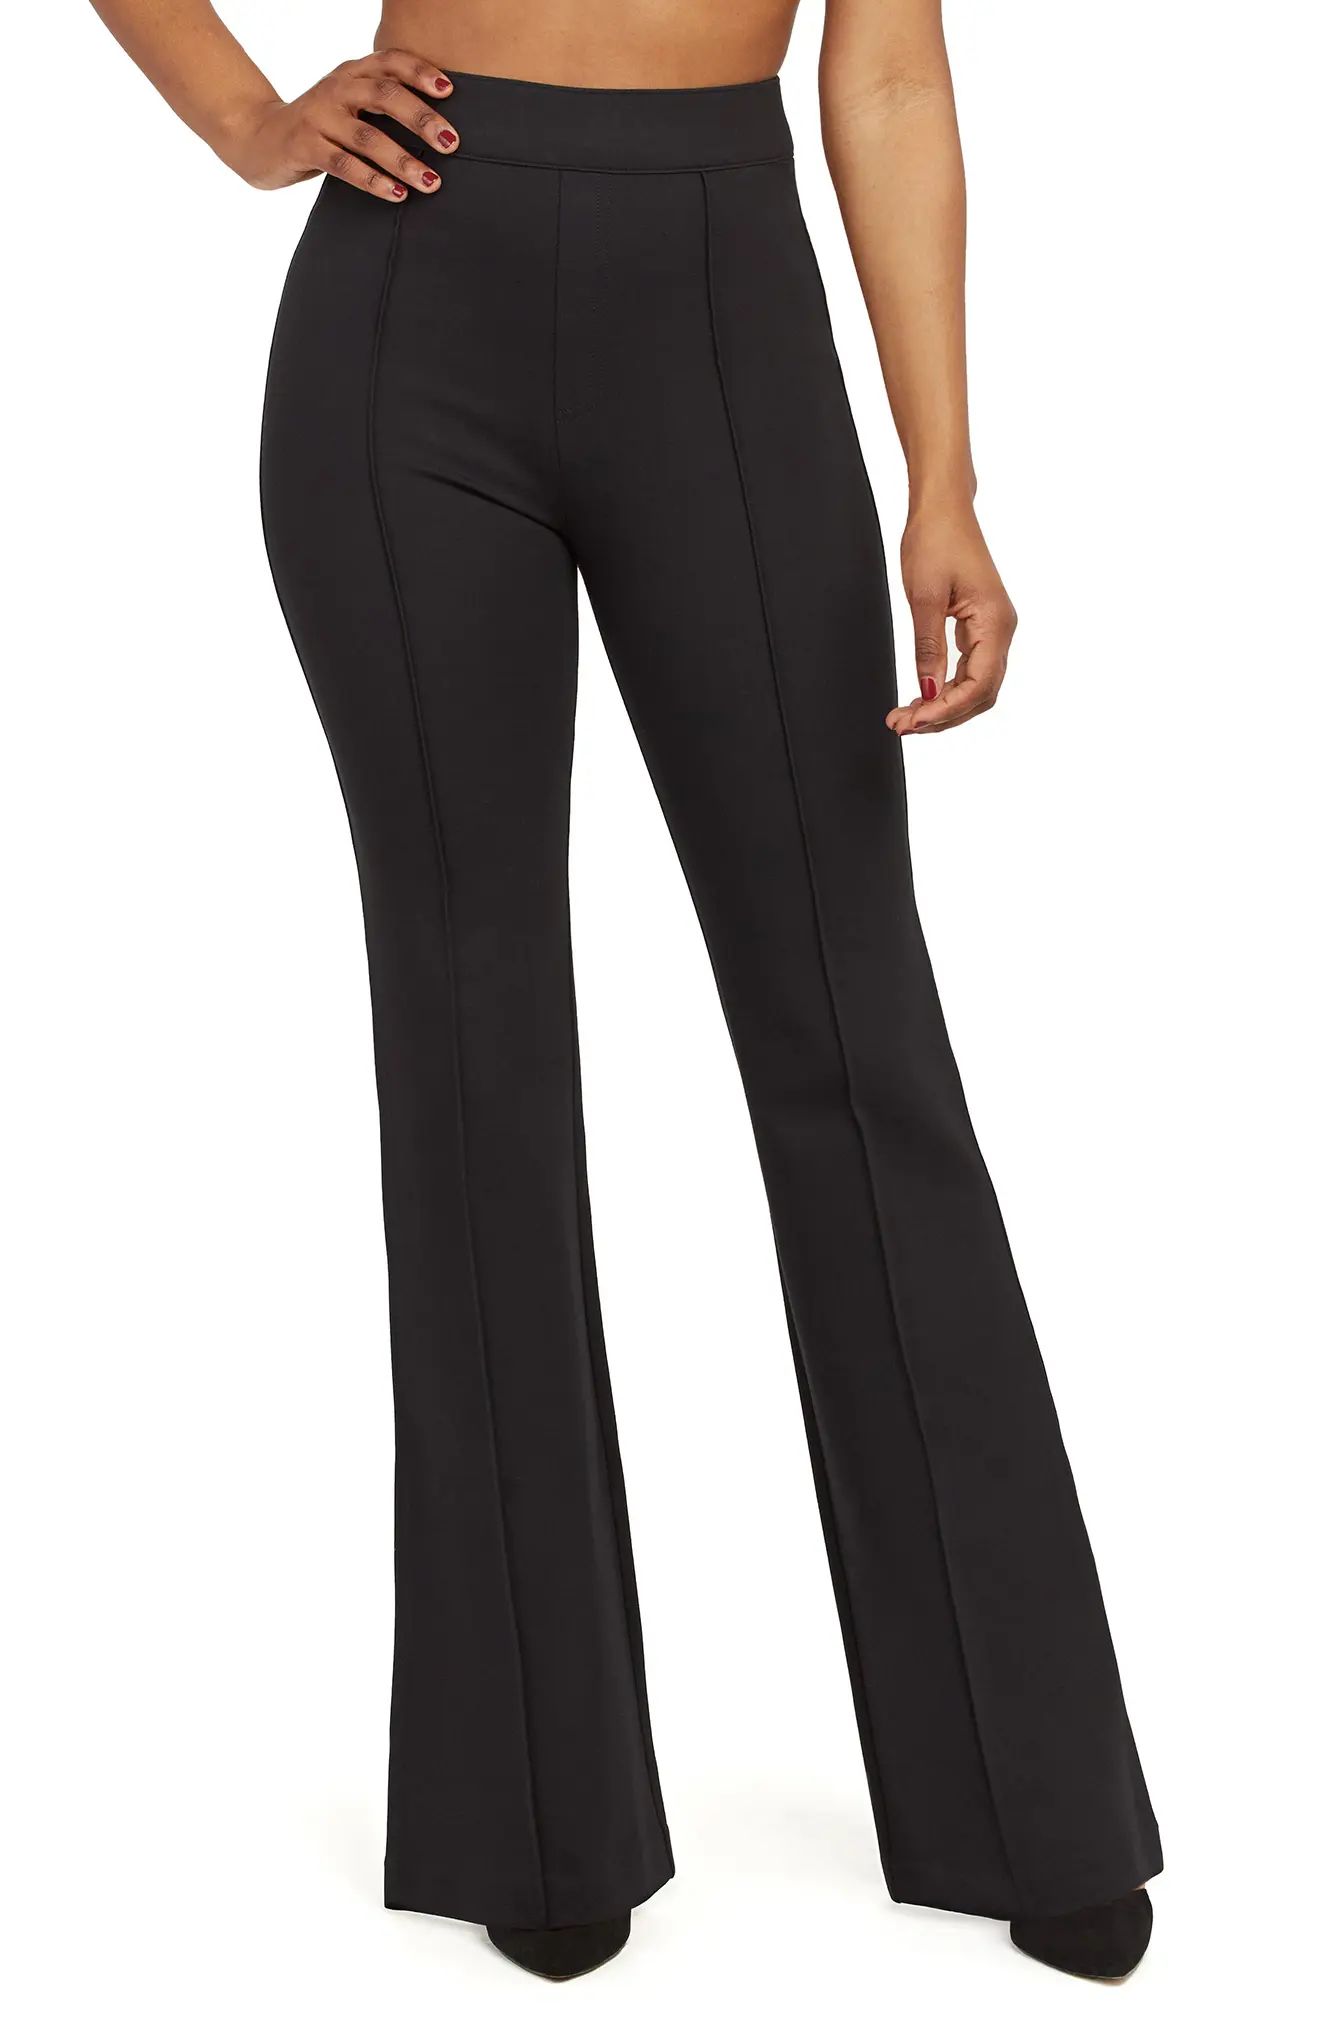 SPANX(R) Flare Ponte Pants, Size 1 X in Classic Black at Nordstrom | Nordstrom